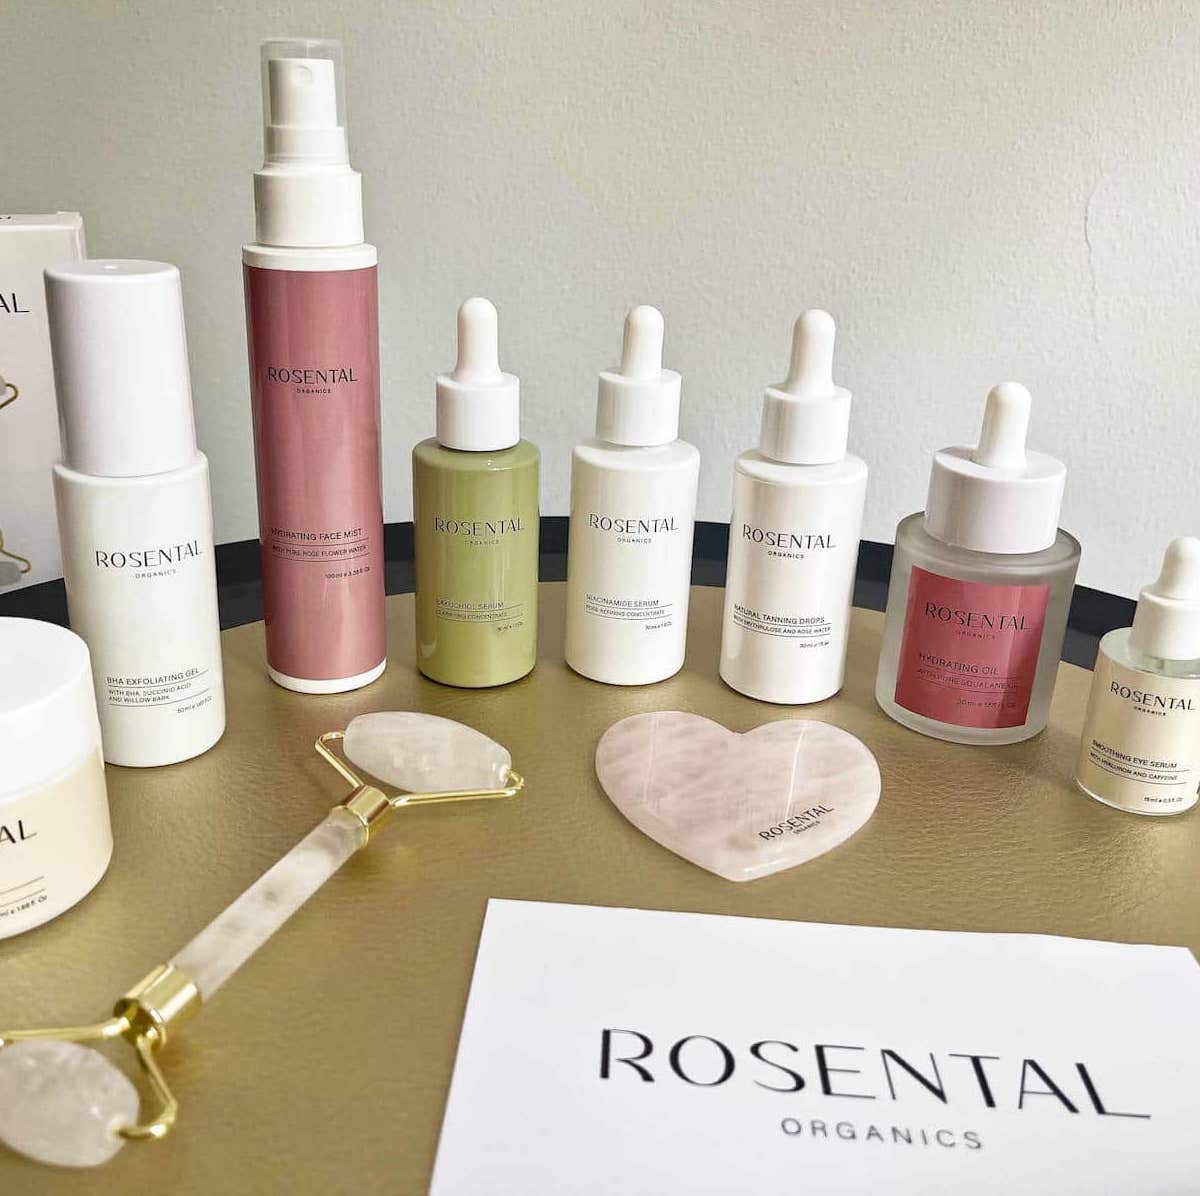 Produktvielfalt bei Rosental Organics.So viele tolle Produkte hat Rosental Organics. Worauf wartest du denn? Teste sie doch alle mal